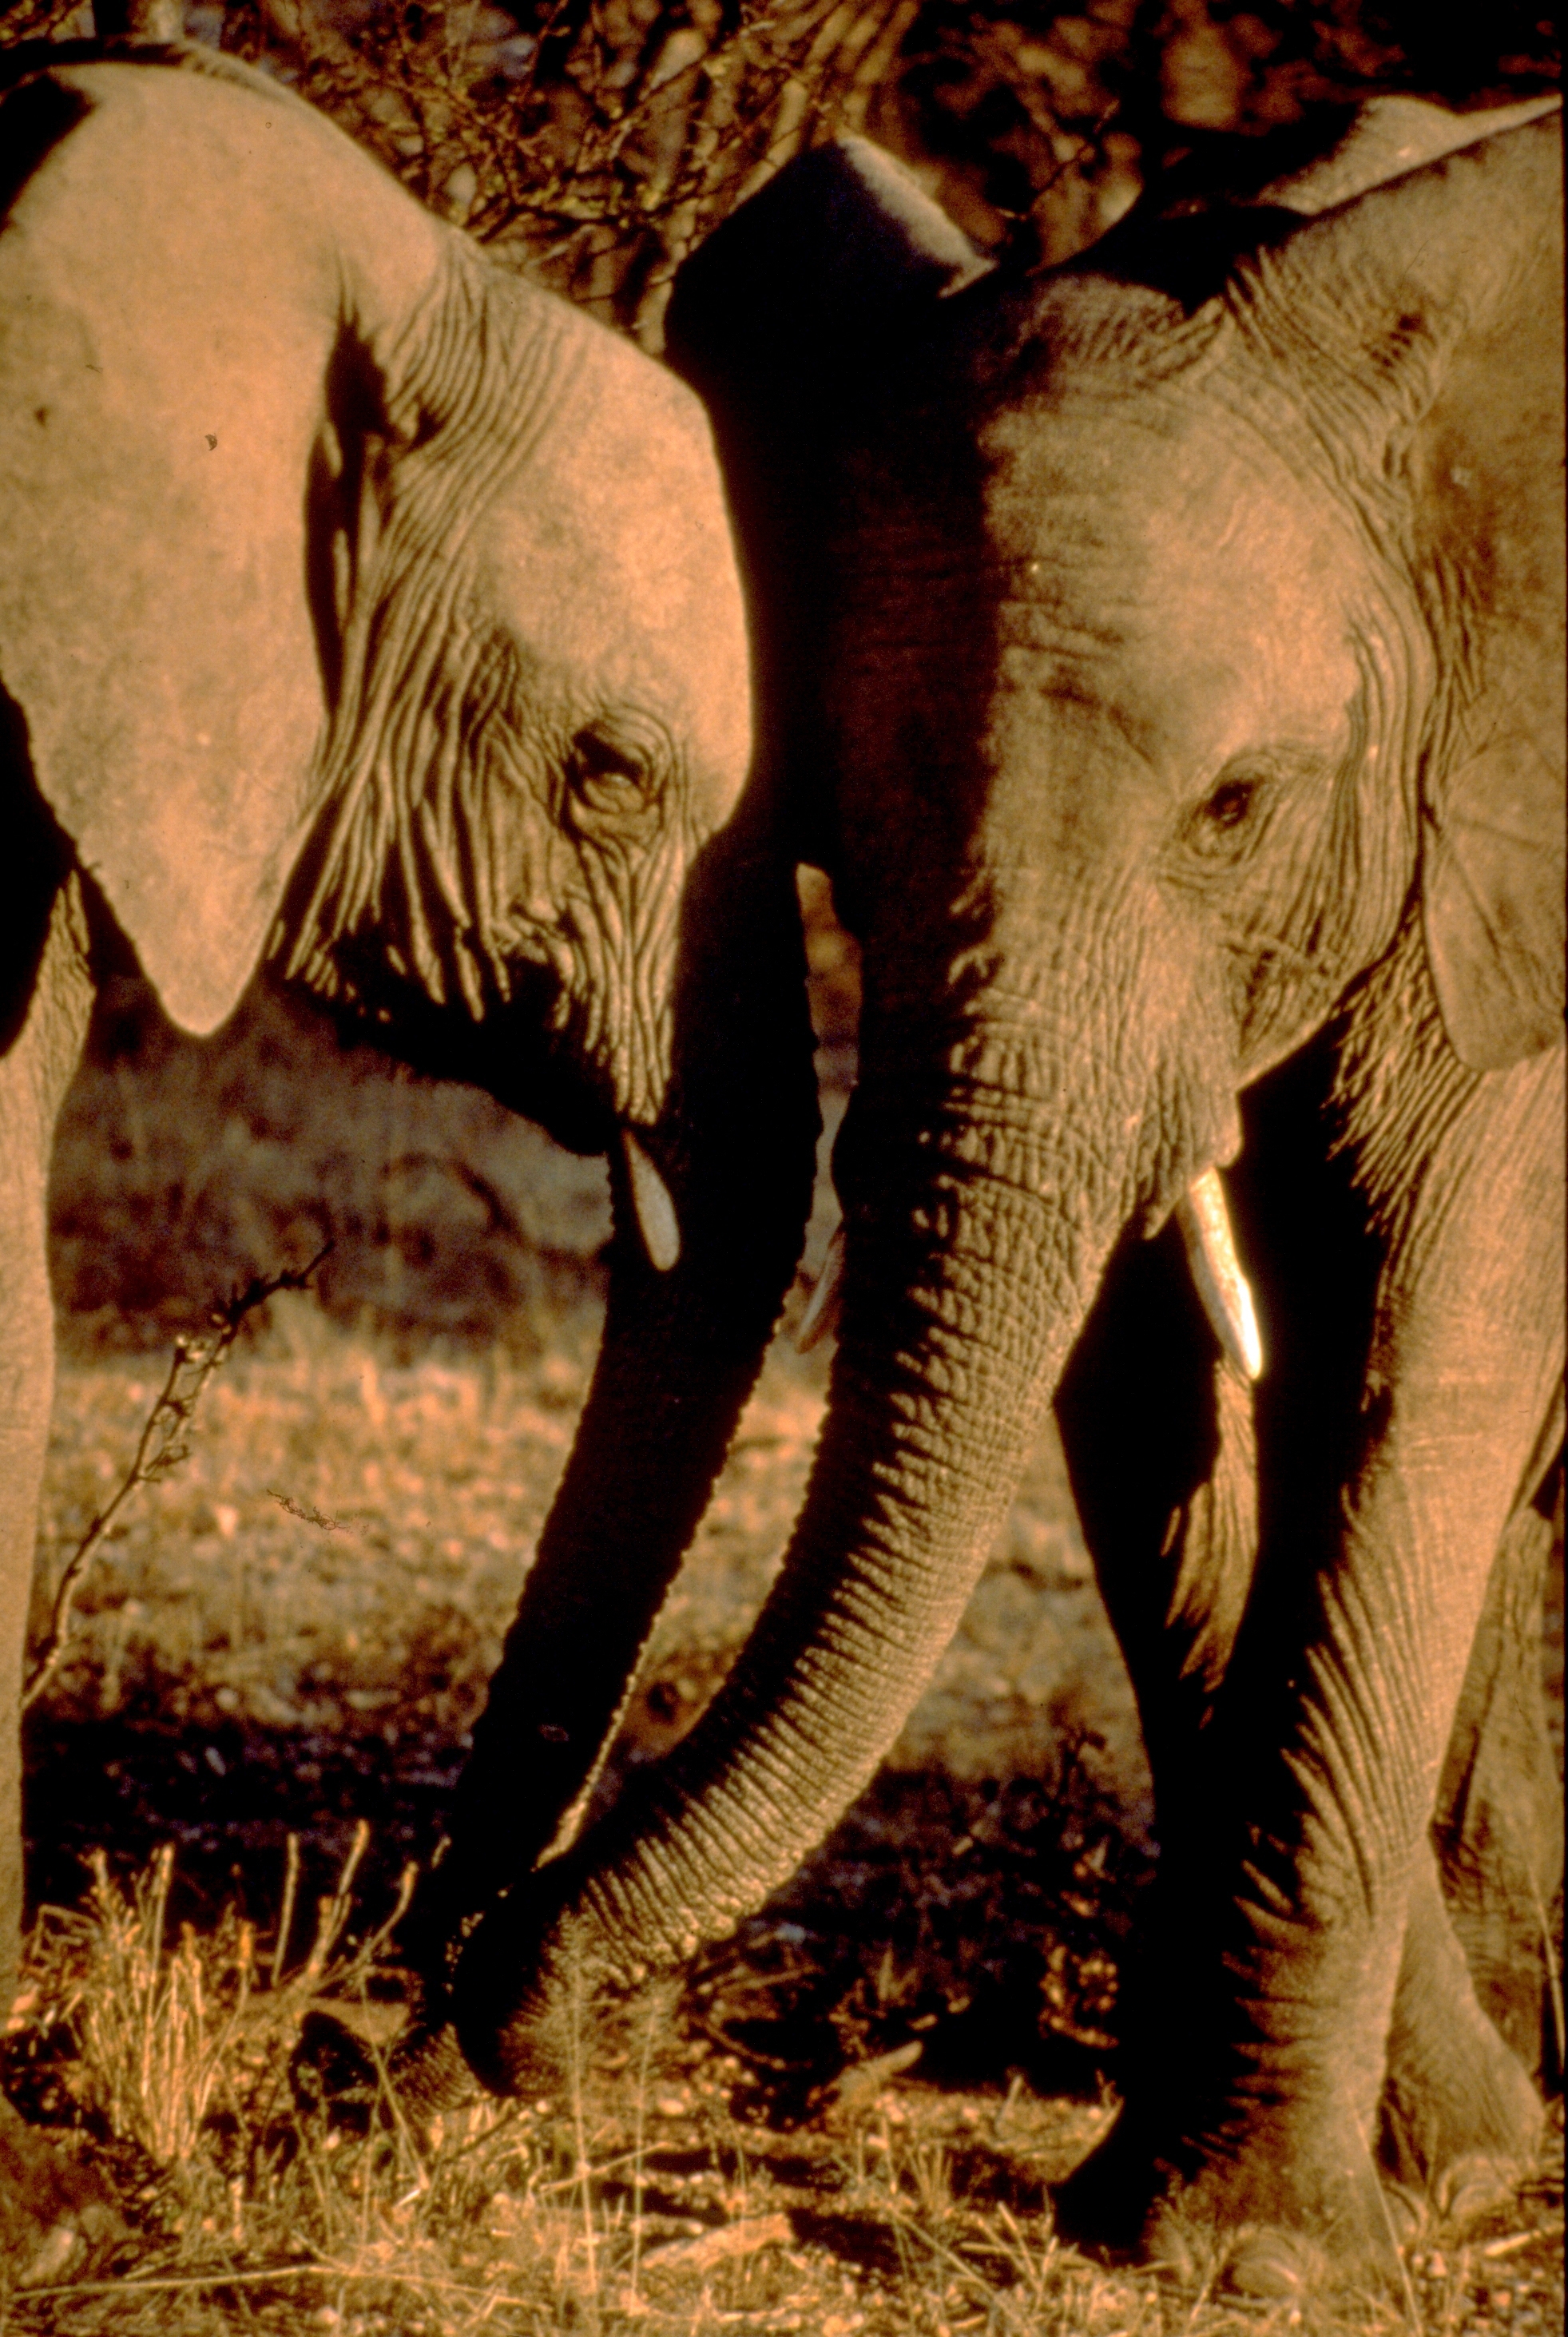 Two elefants in the Kalahari-desert